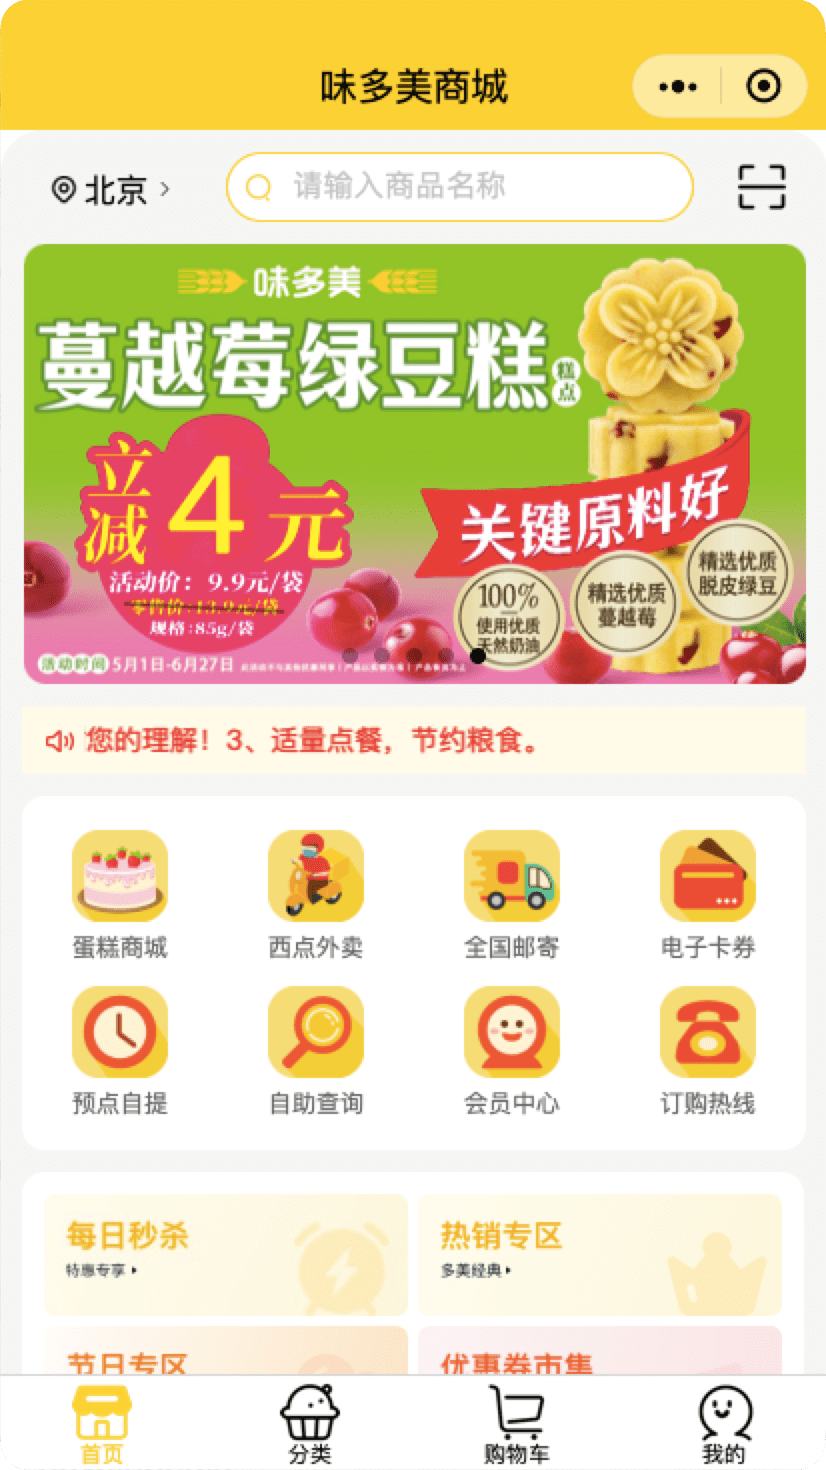 WeiDuoMei utilized a smart kiosk, enabling users to make purchase through WeiDuoMei Mini Program